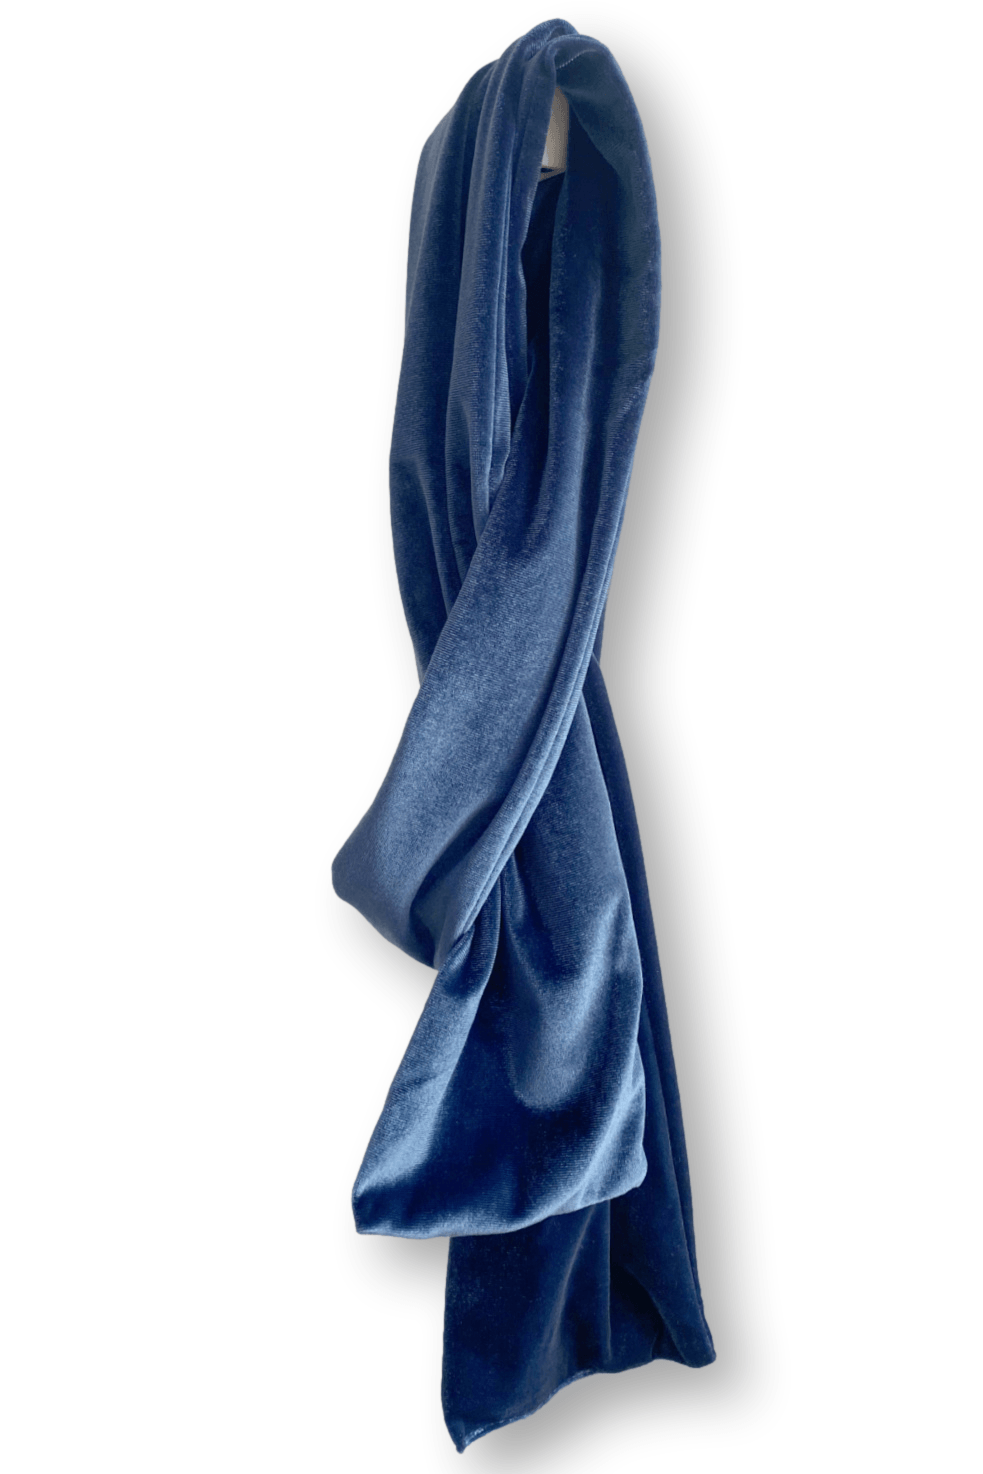 Soft luxurious velvet scarf in a vintage blue color.